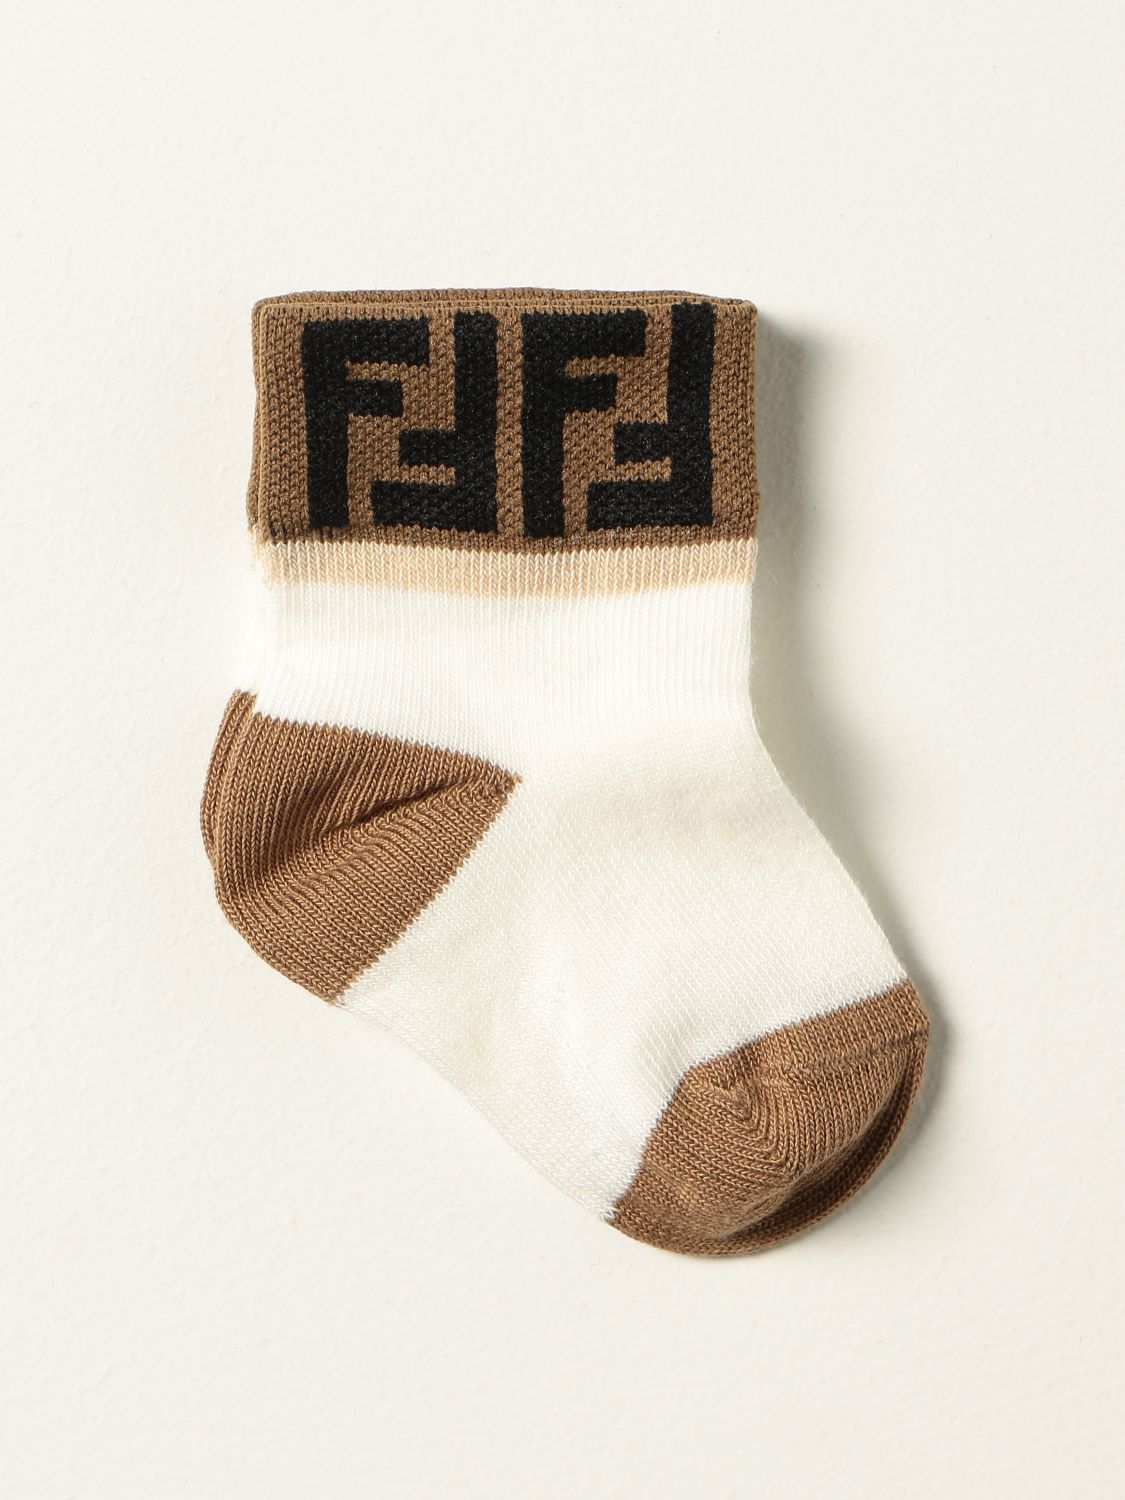 FENDI: socks with all-over logo | Socks Baby Fendi Kids | Baby Fendi BFN031 ACPF GIGLIO.COM